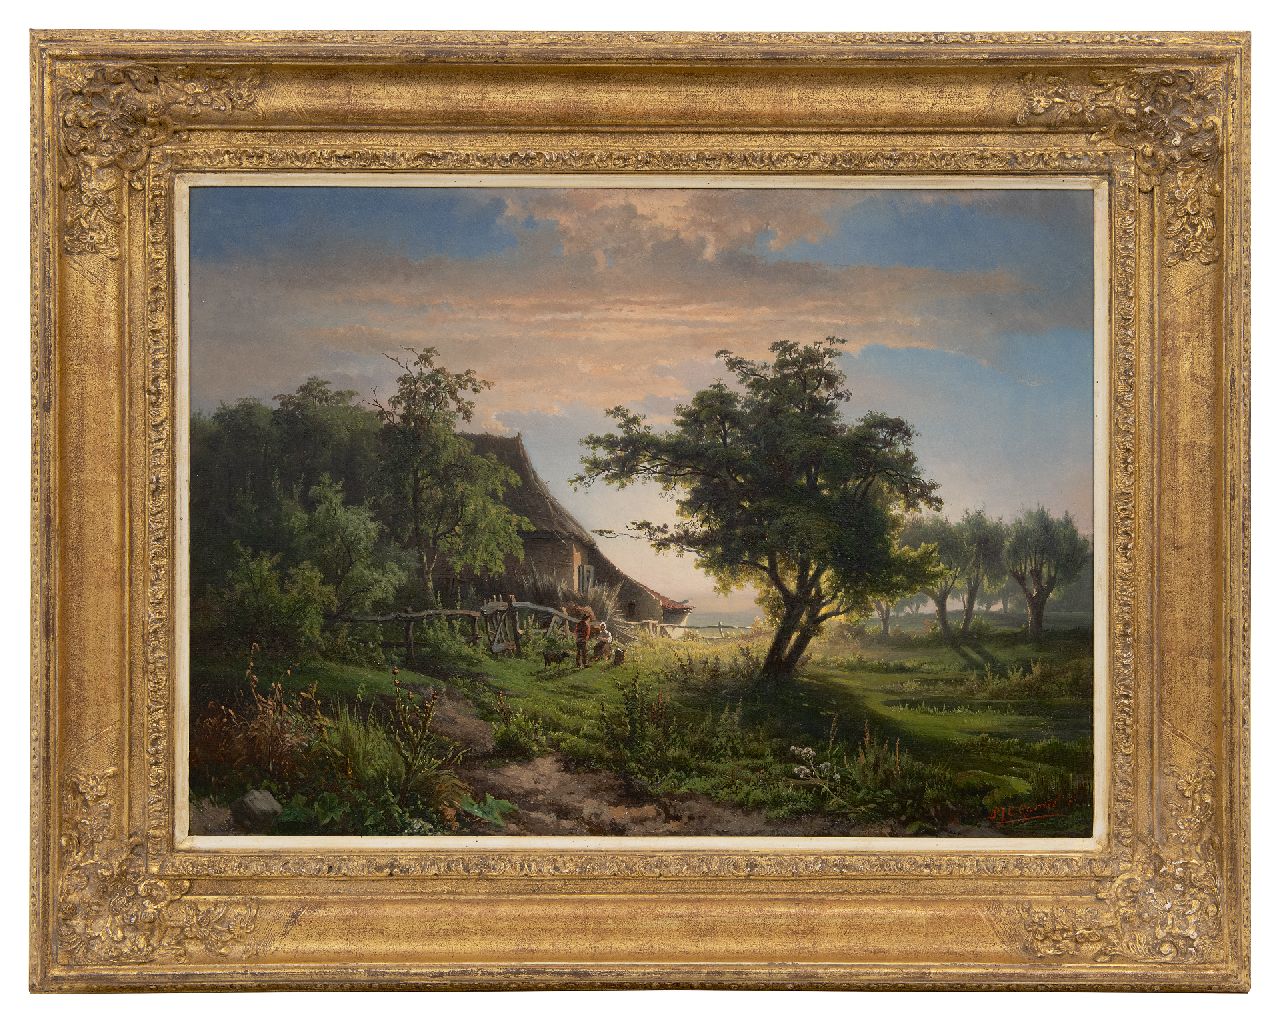 Gabriel P.J.C.  | Paul Joseph Constantin 'Constan(t)' Gabriel | Paintings offered for sale | Landscape with farm at sunset, oil on canvas 45.5 x 63.0 cm, signed l.r.